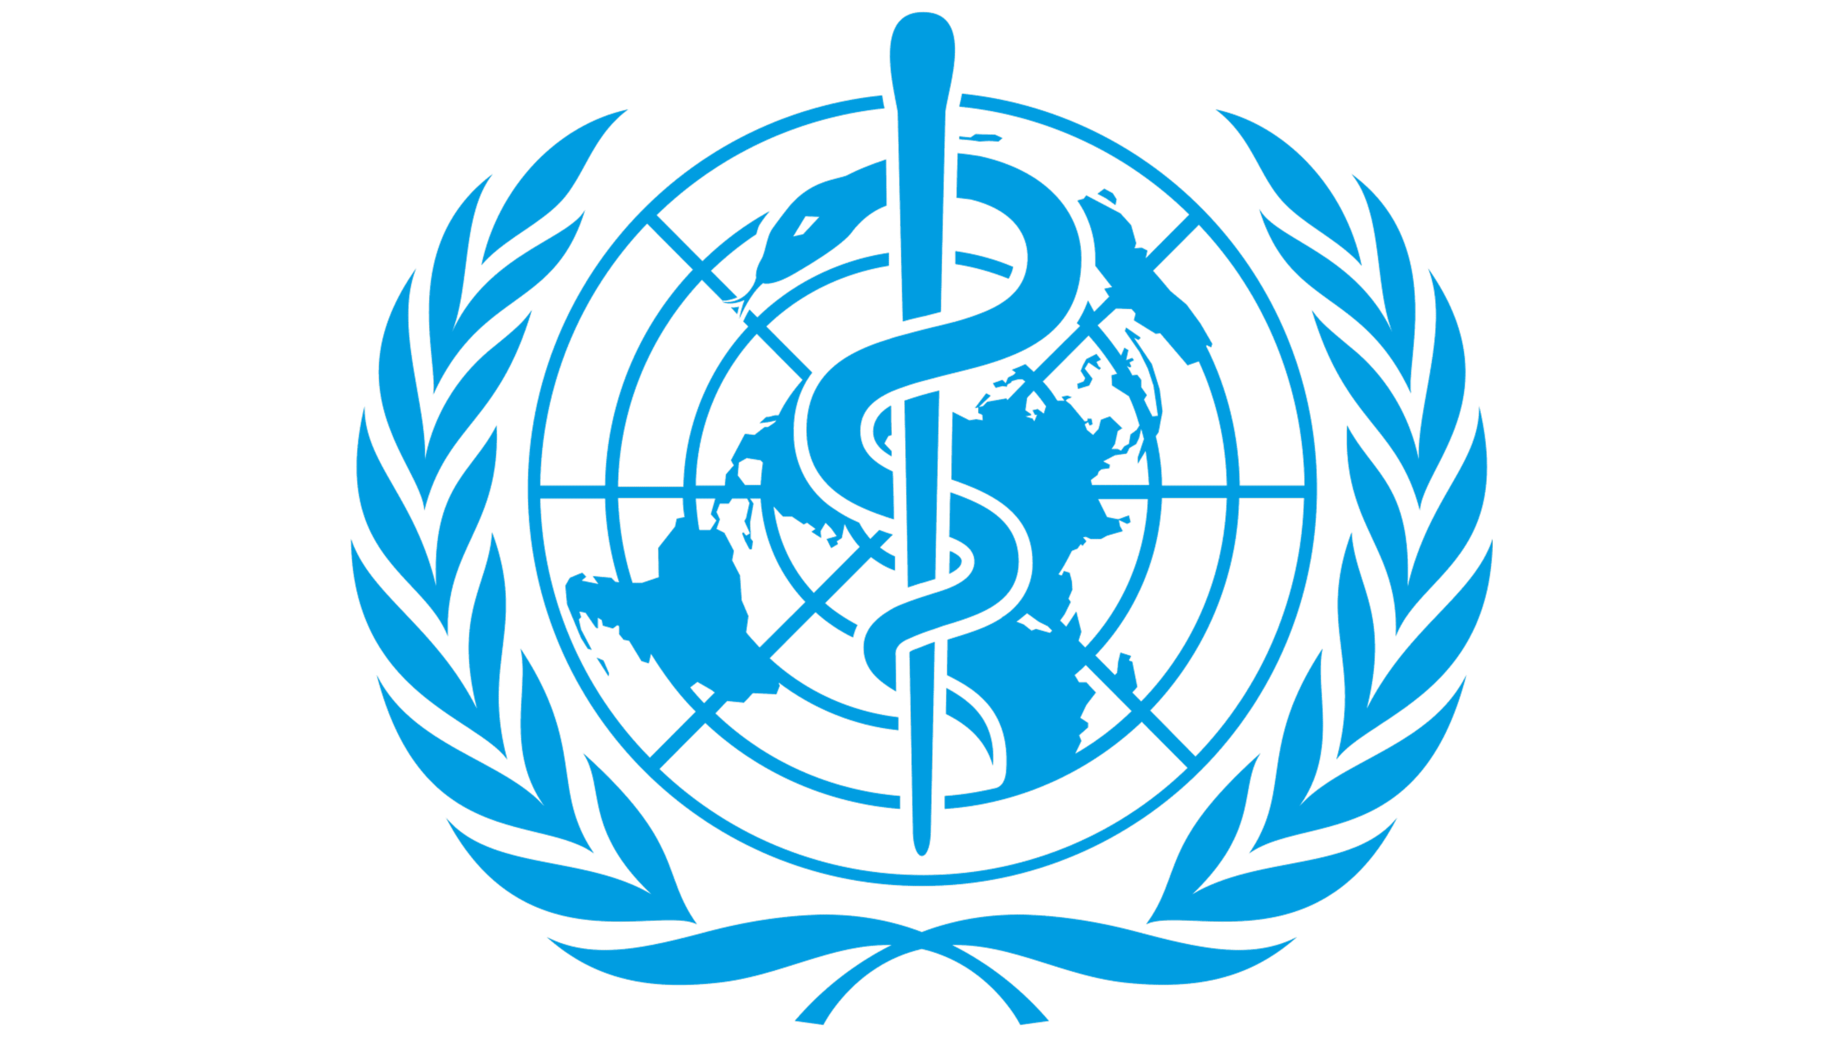 World health organization who symbol